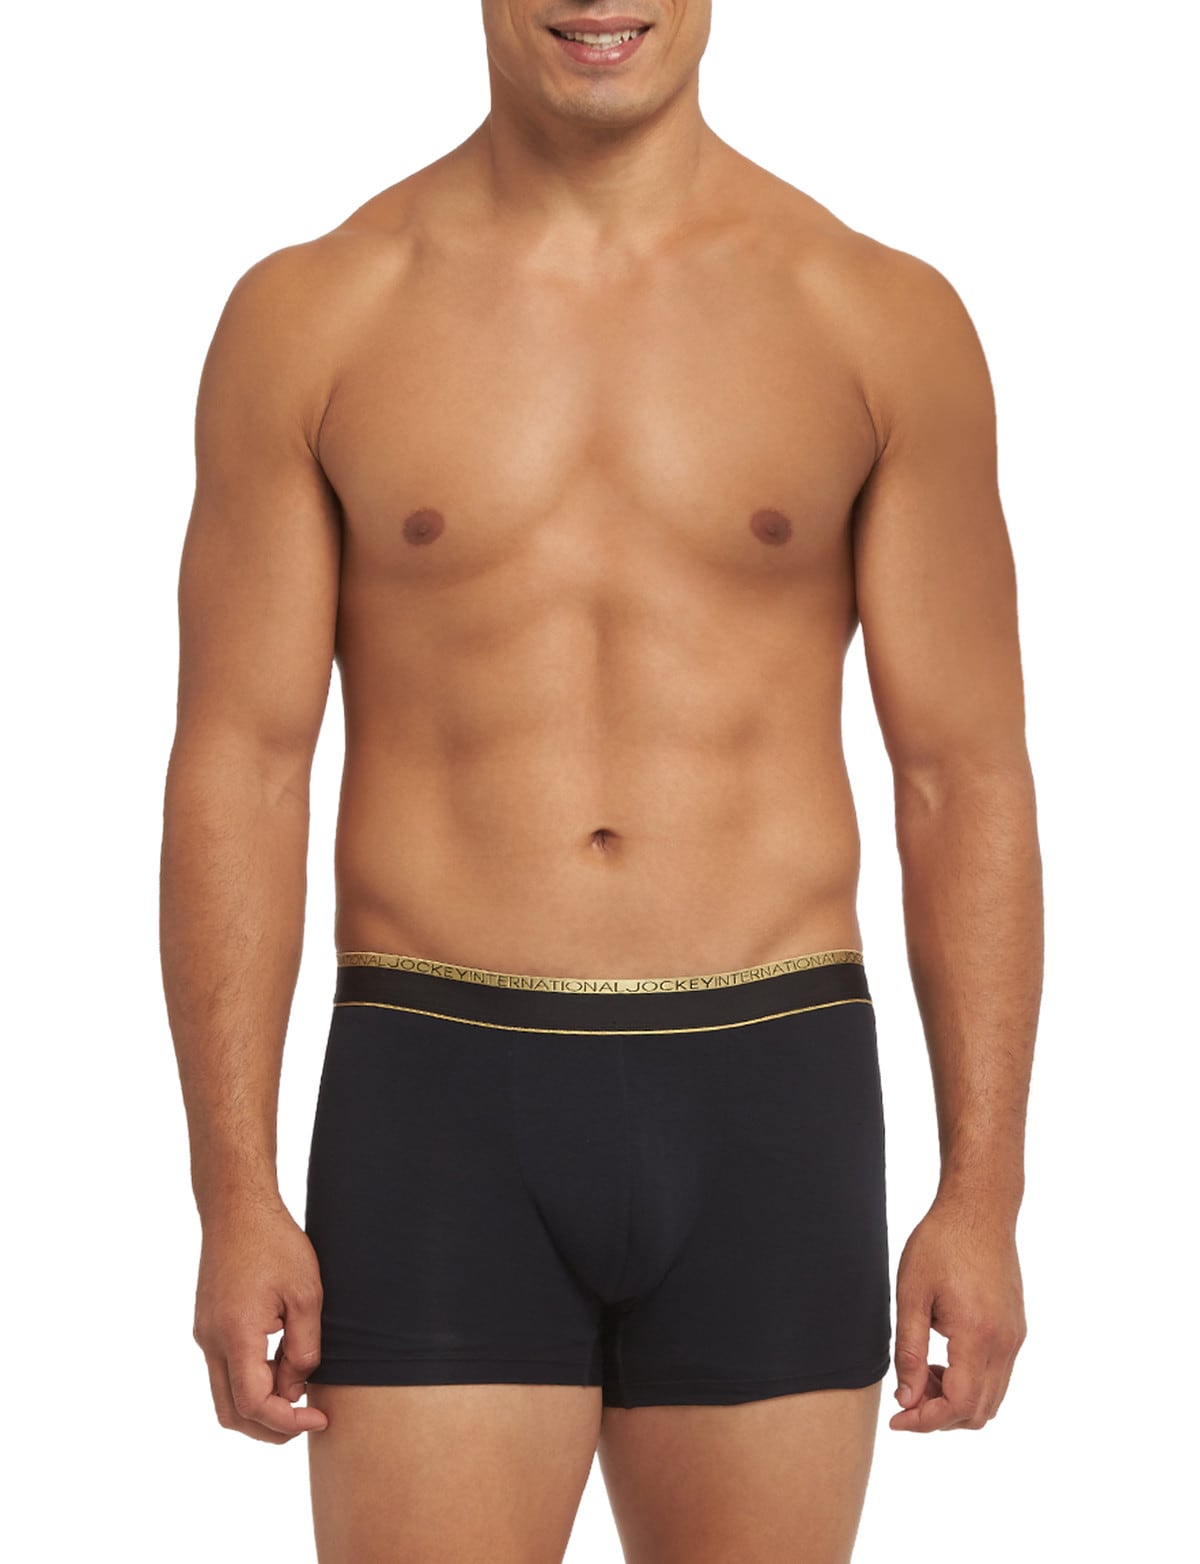 Jockey International Monaco Brief MYCK1A Deepest Navy Mens Underwear